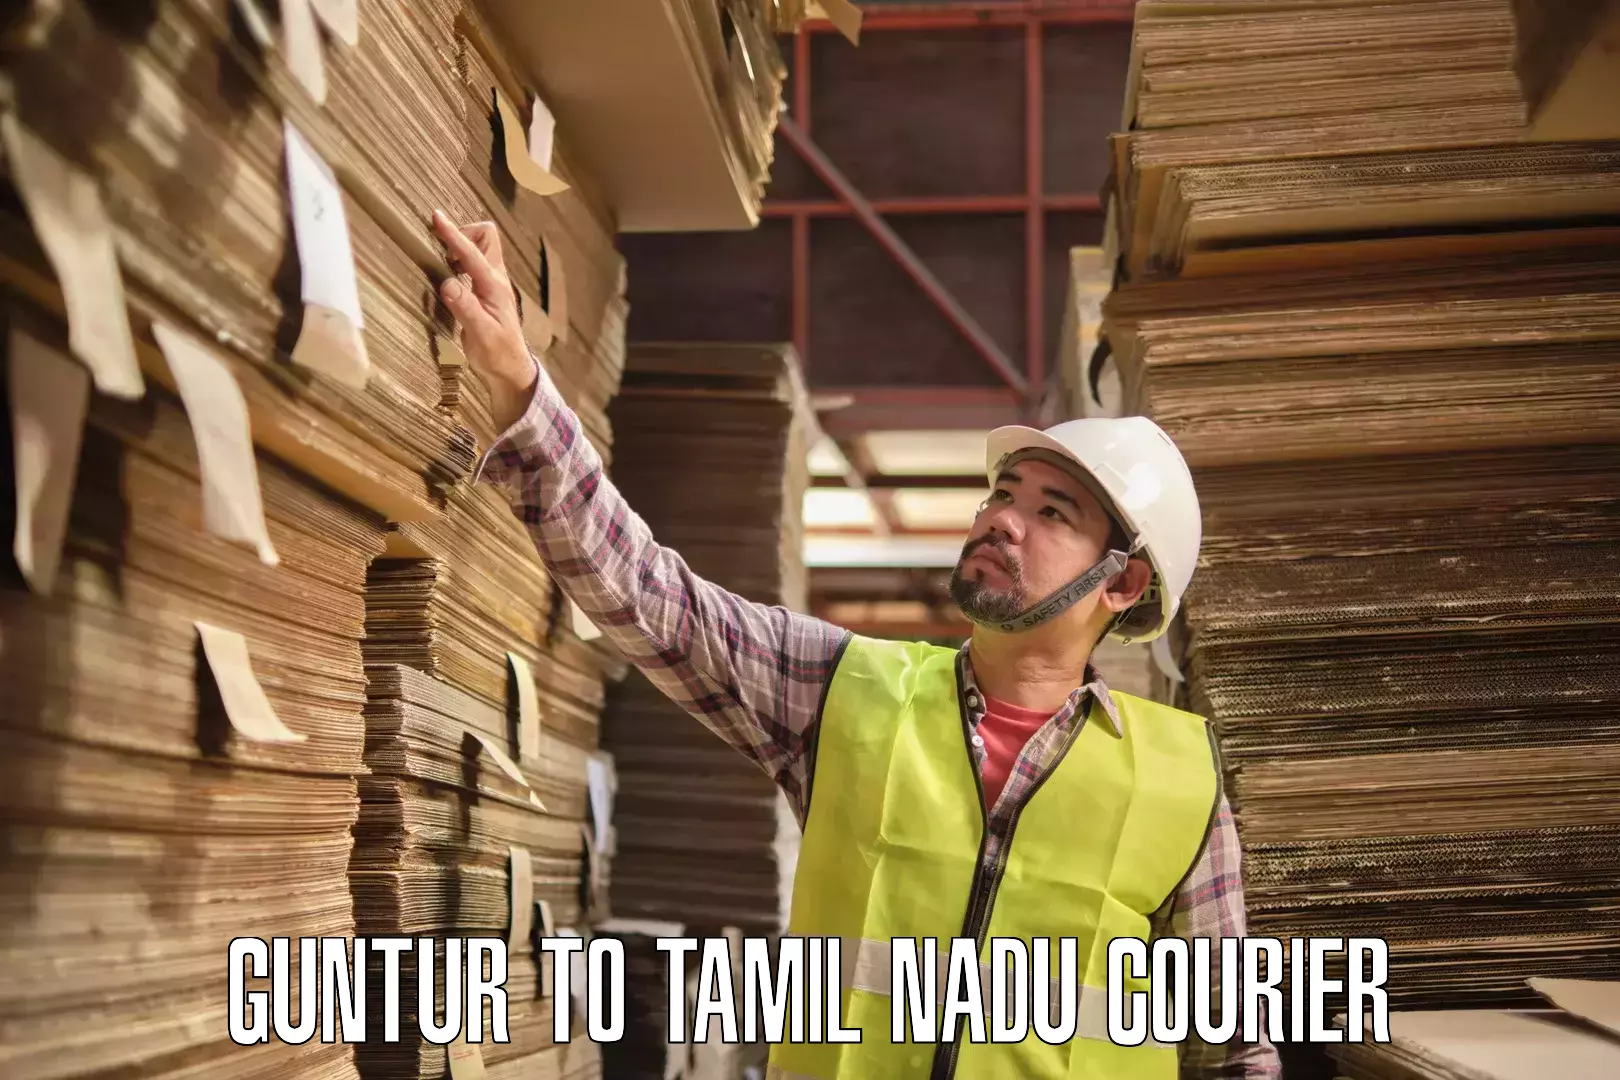 Courier service efficiency Guntur to Arani